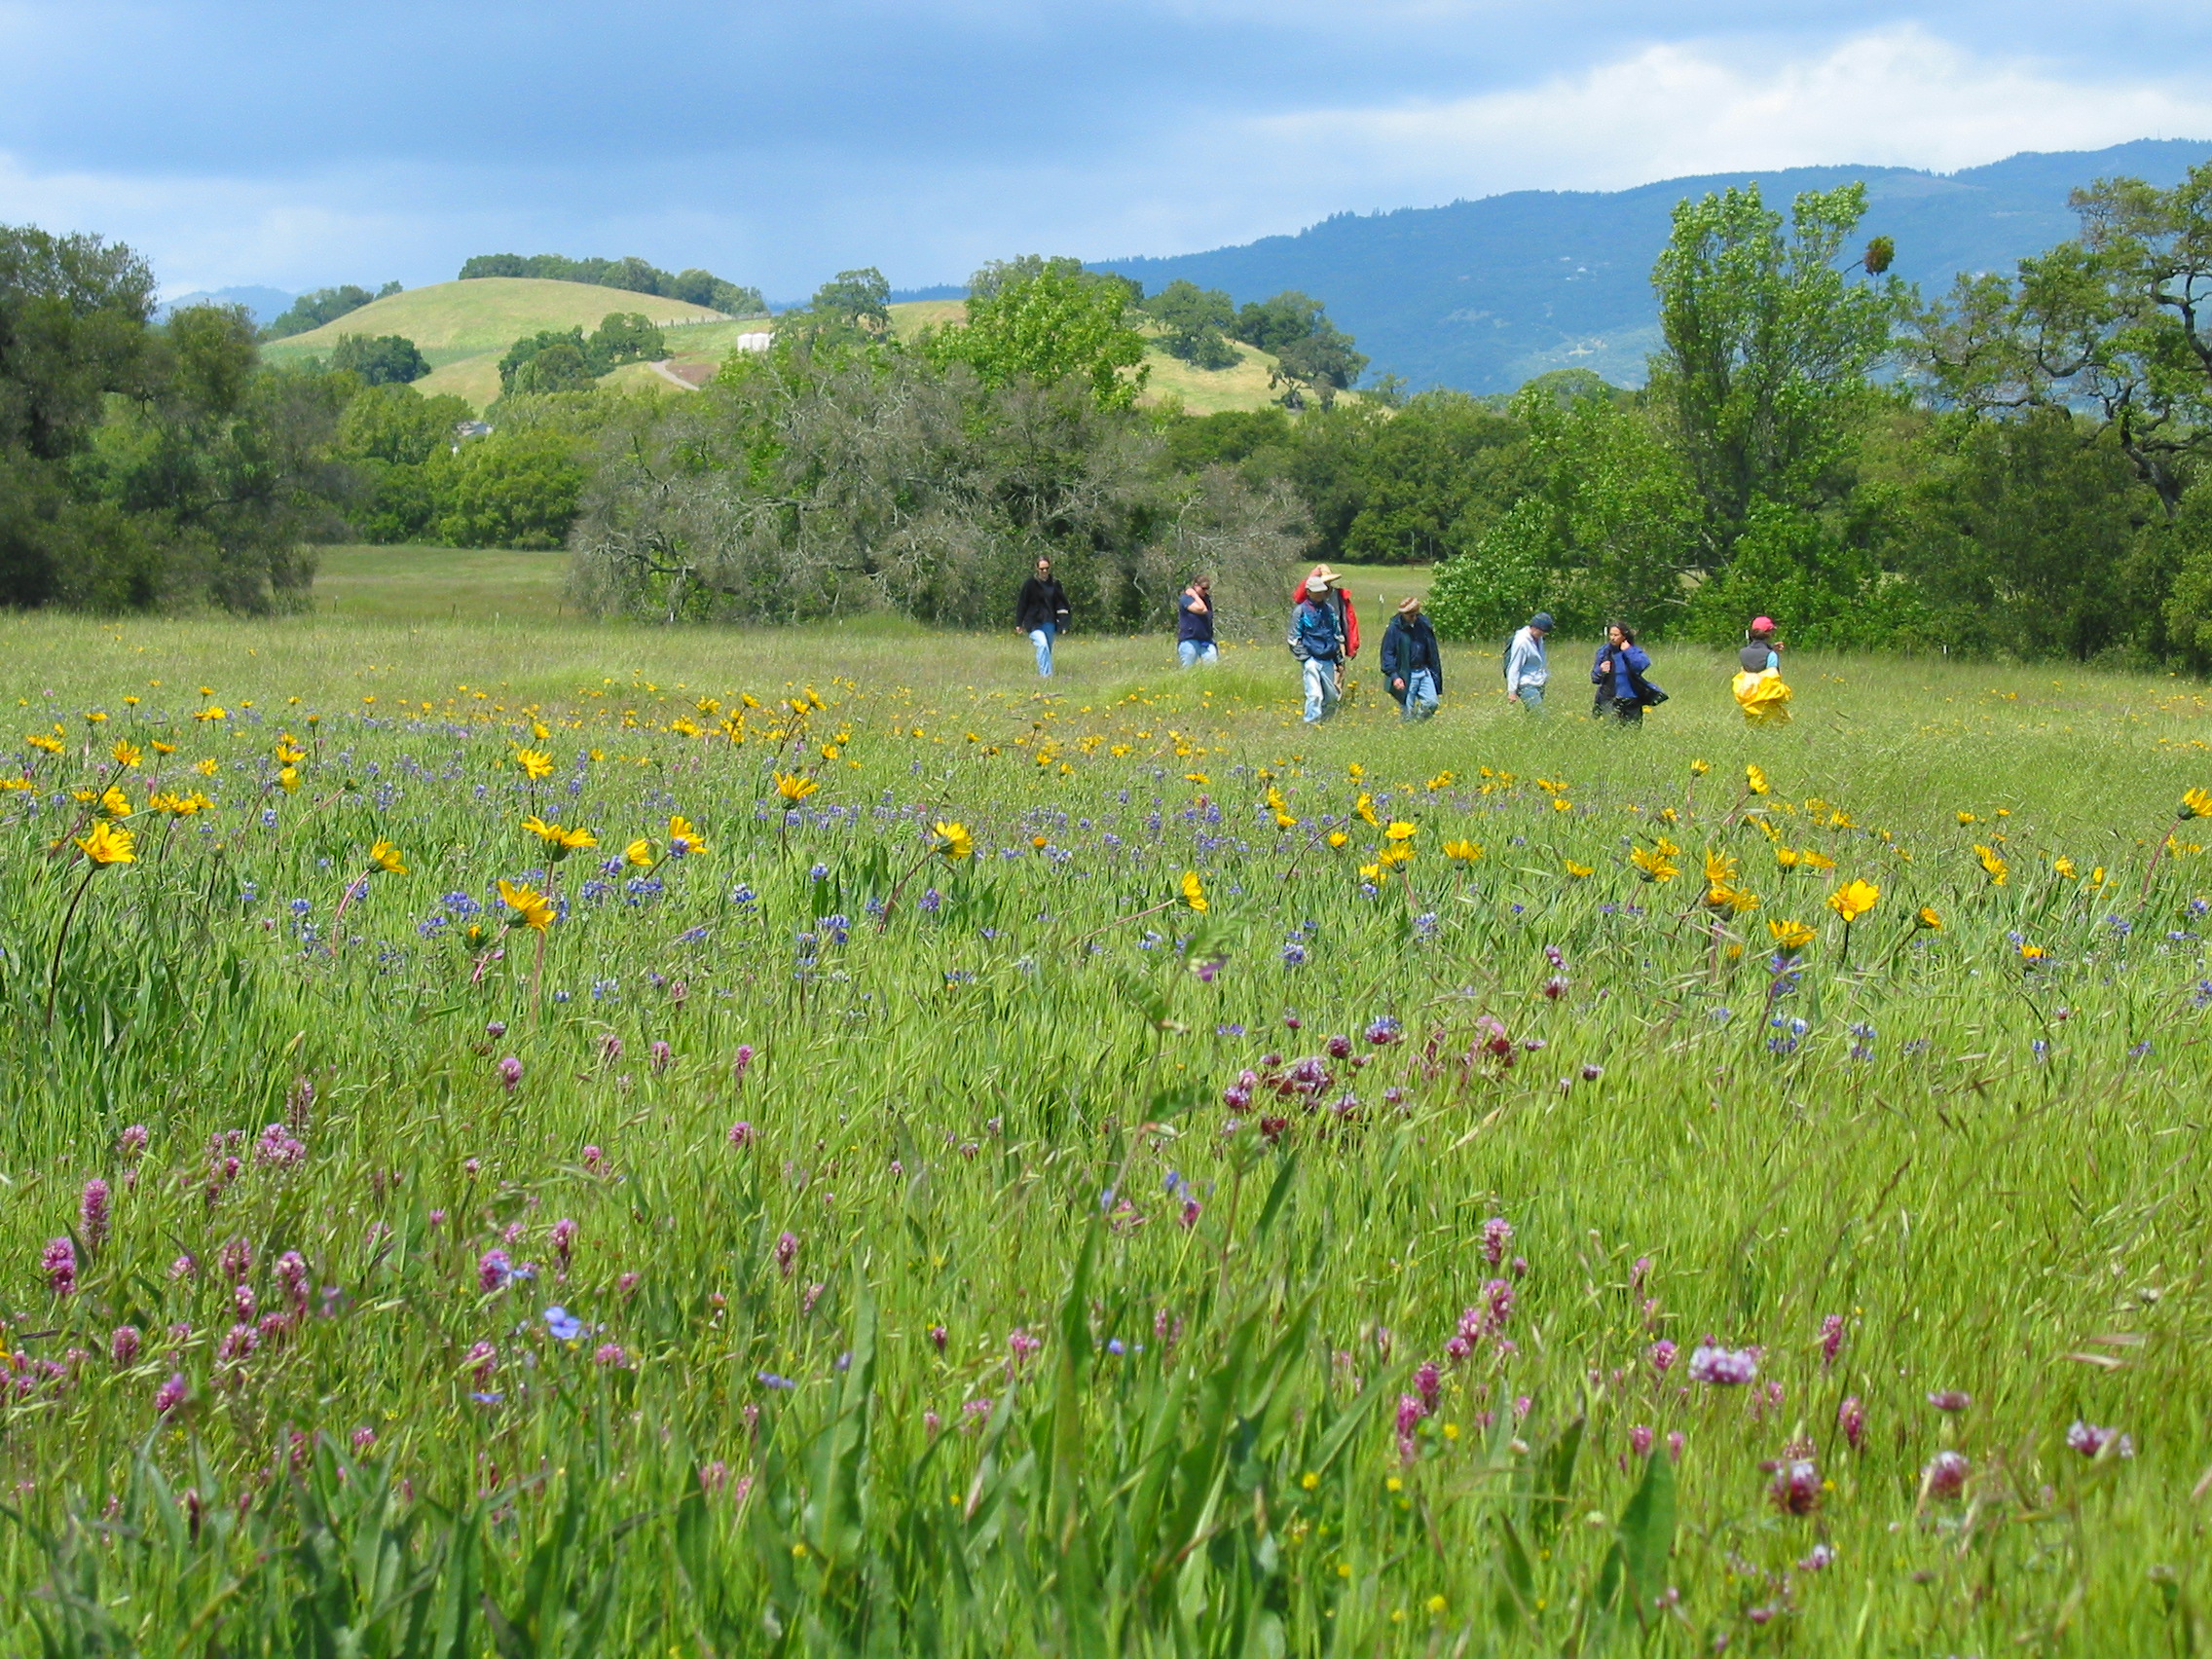 Group walking through field of wildflowers.